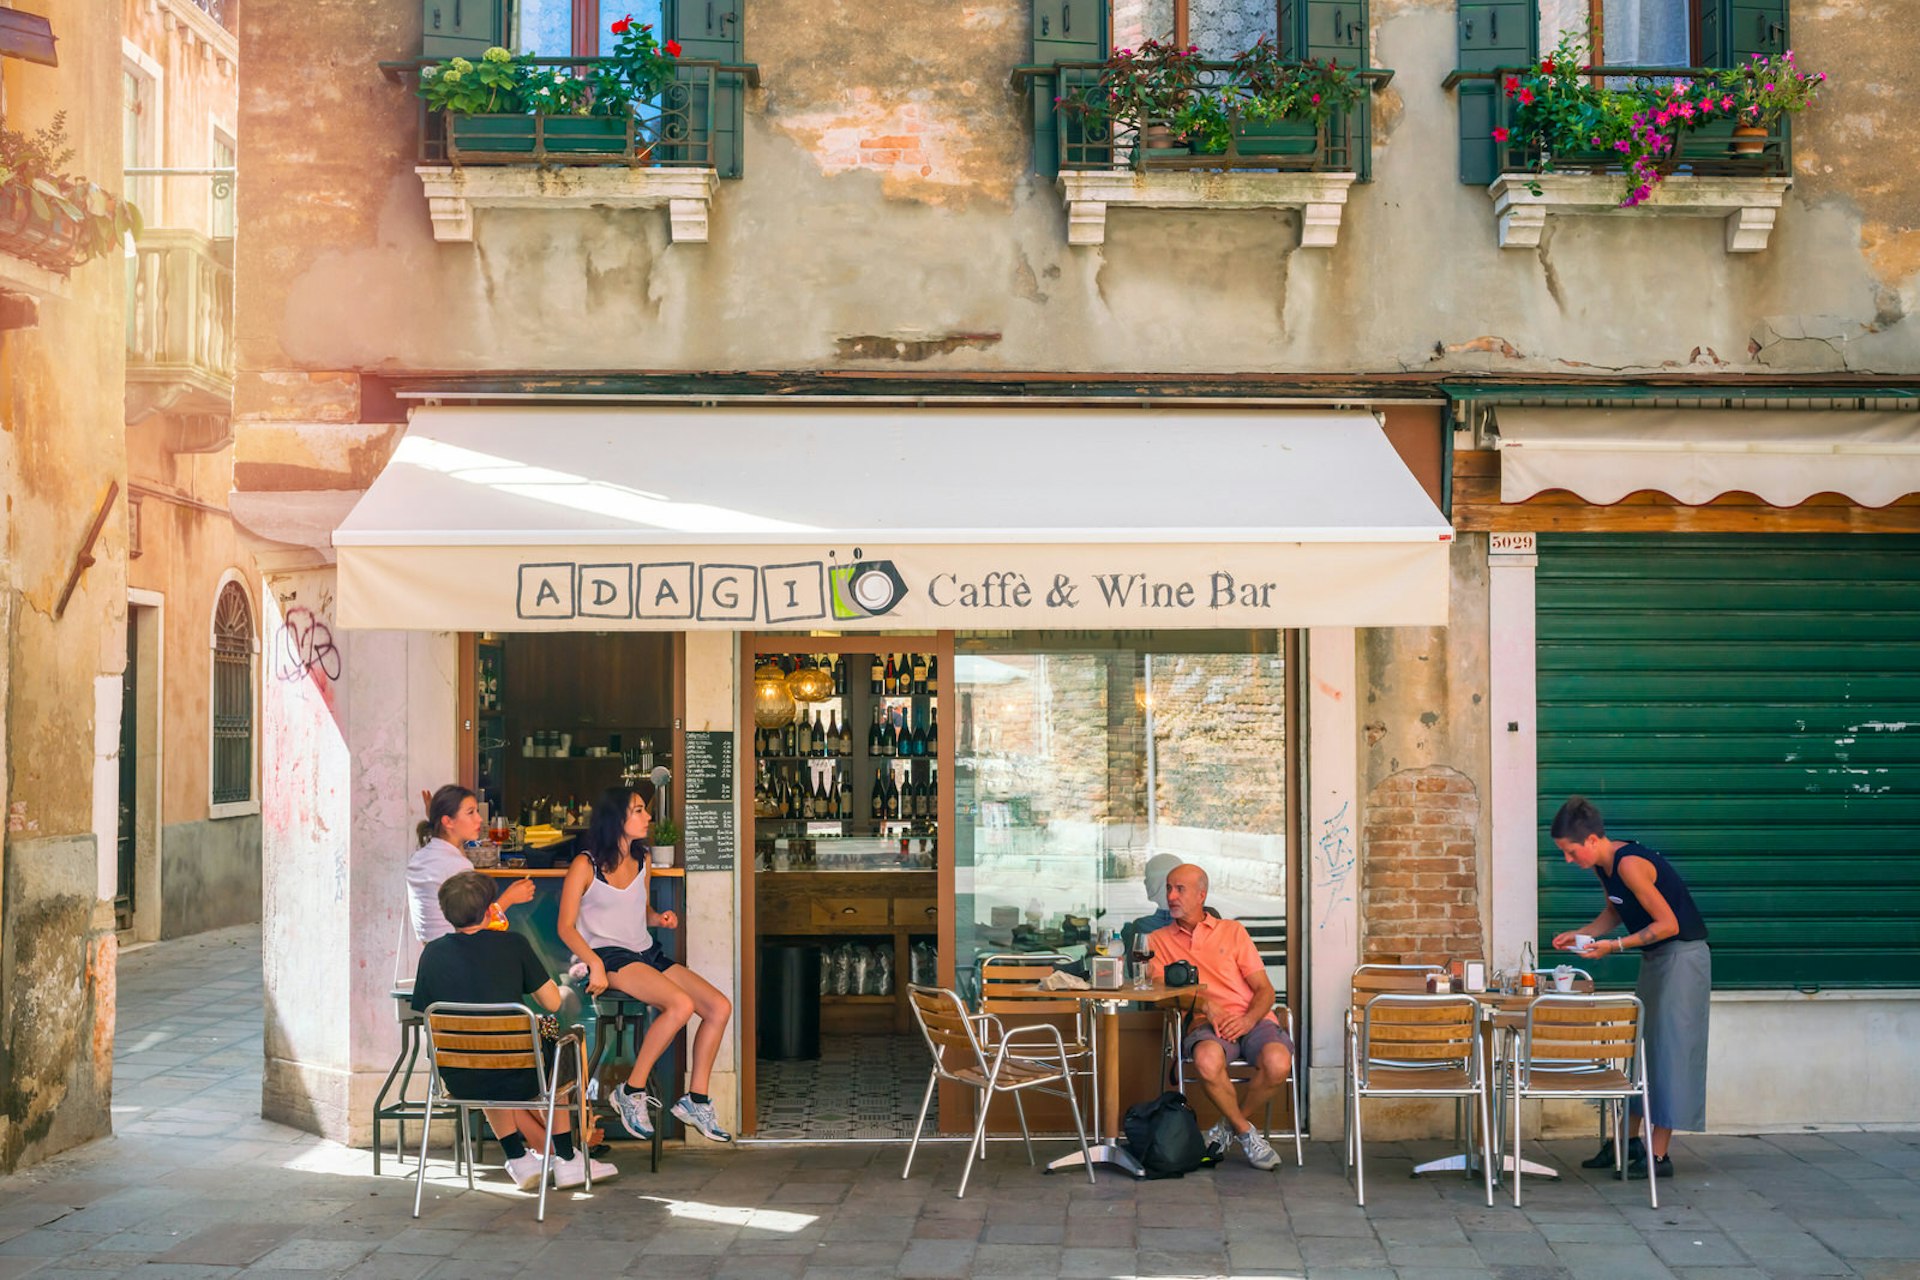 Adagi Caffee and Wine Bar in Venice, Italy